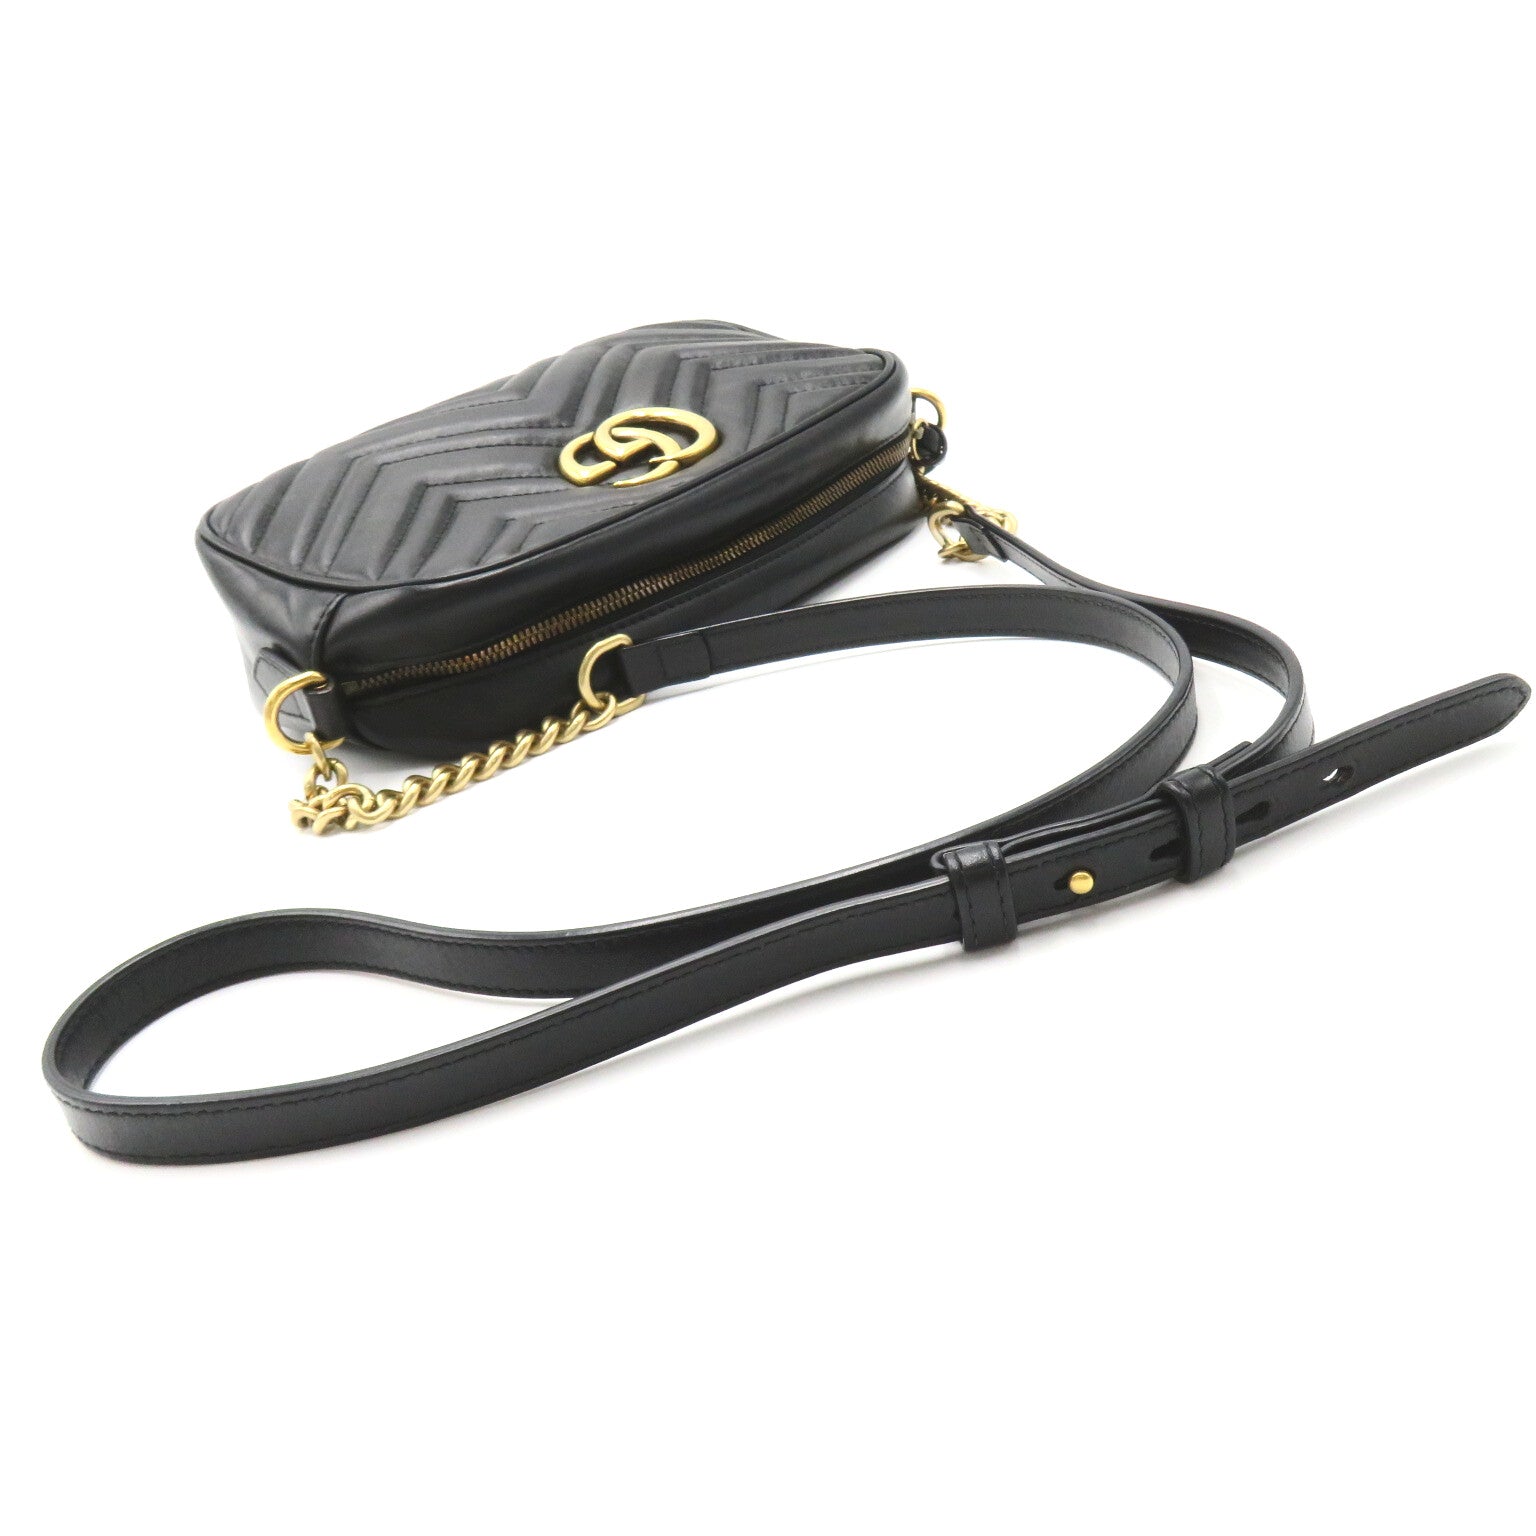 Gucci GG Marmont Kilting Smool Chain Shoulder Bag  Black 447632